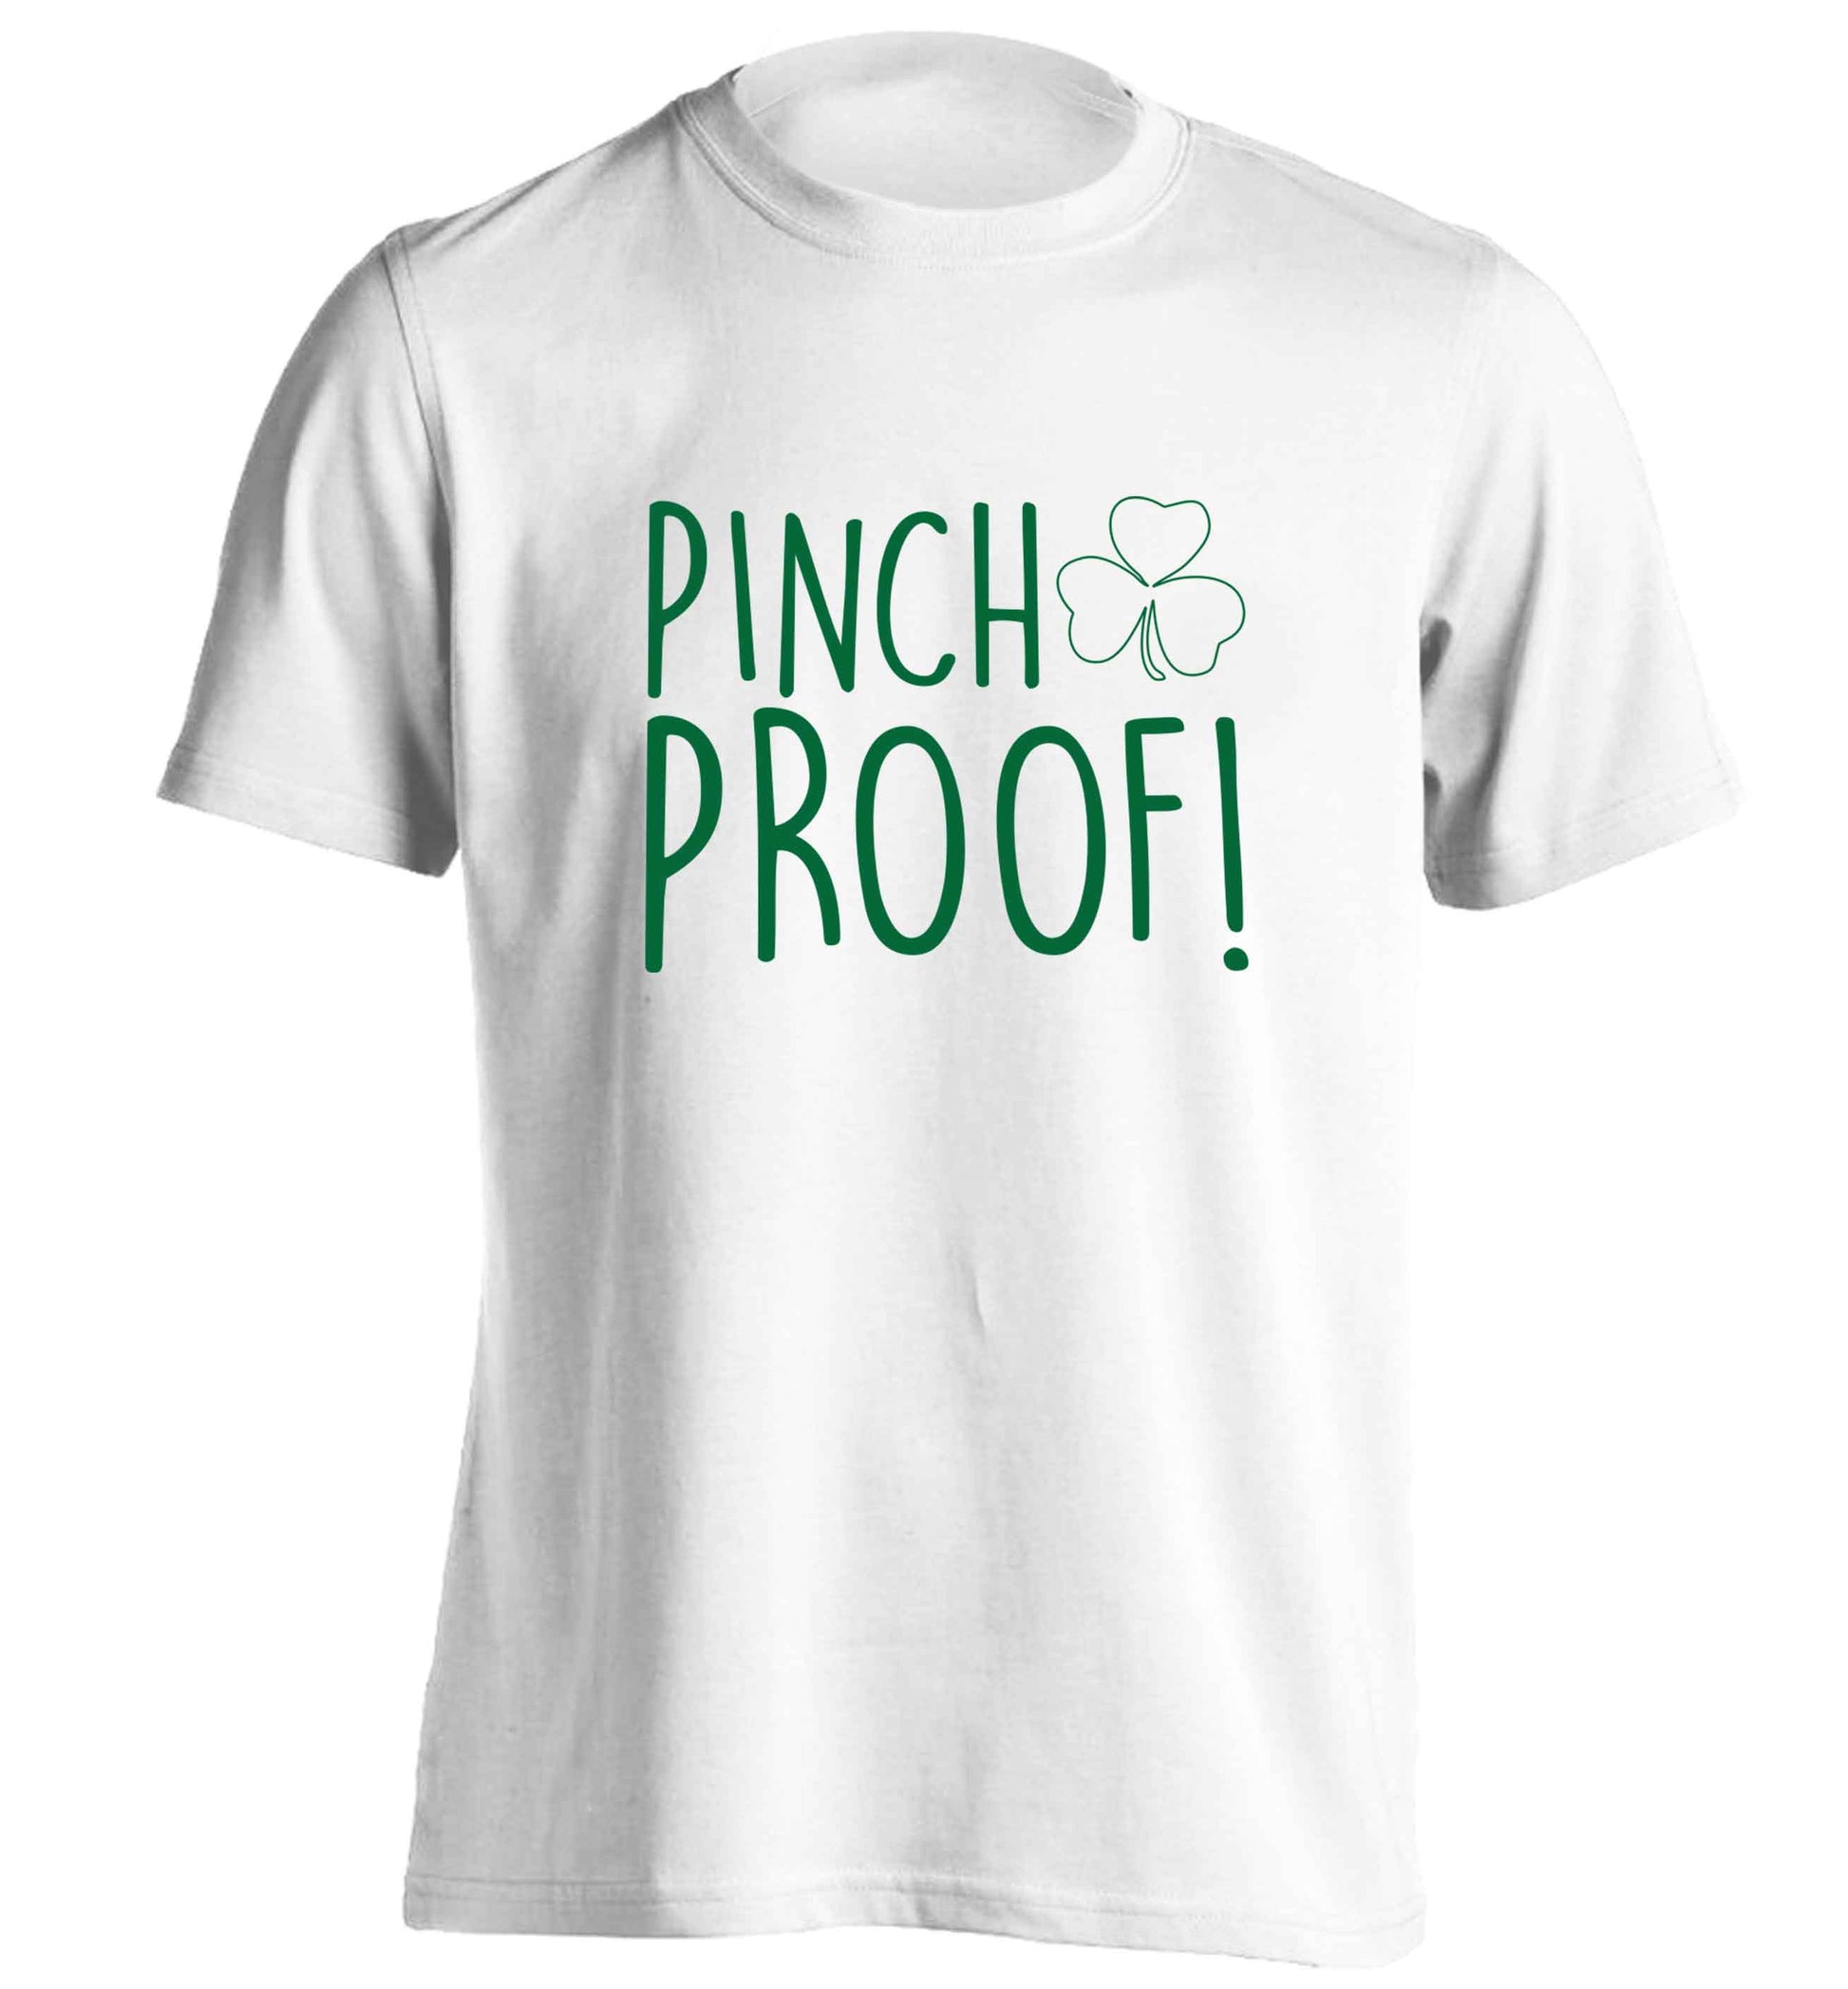 Pinch Proof adults unisex white Tshirt 2XL